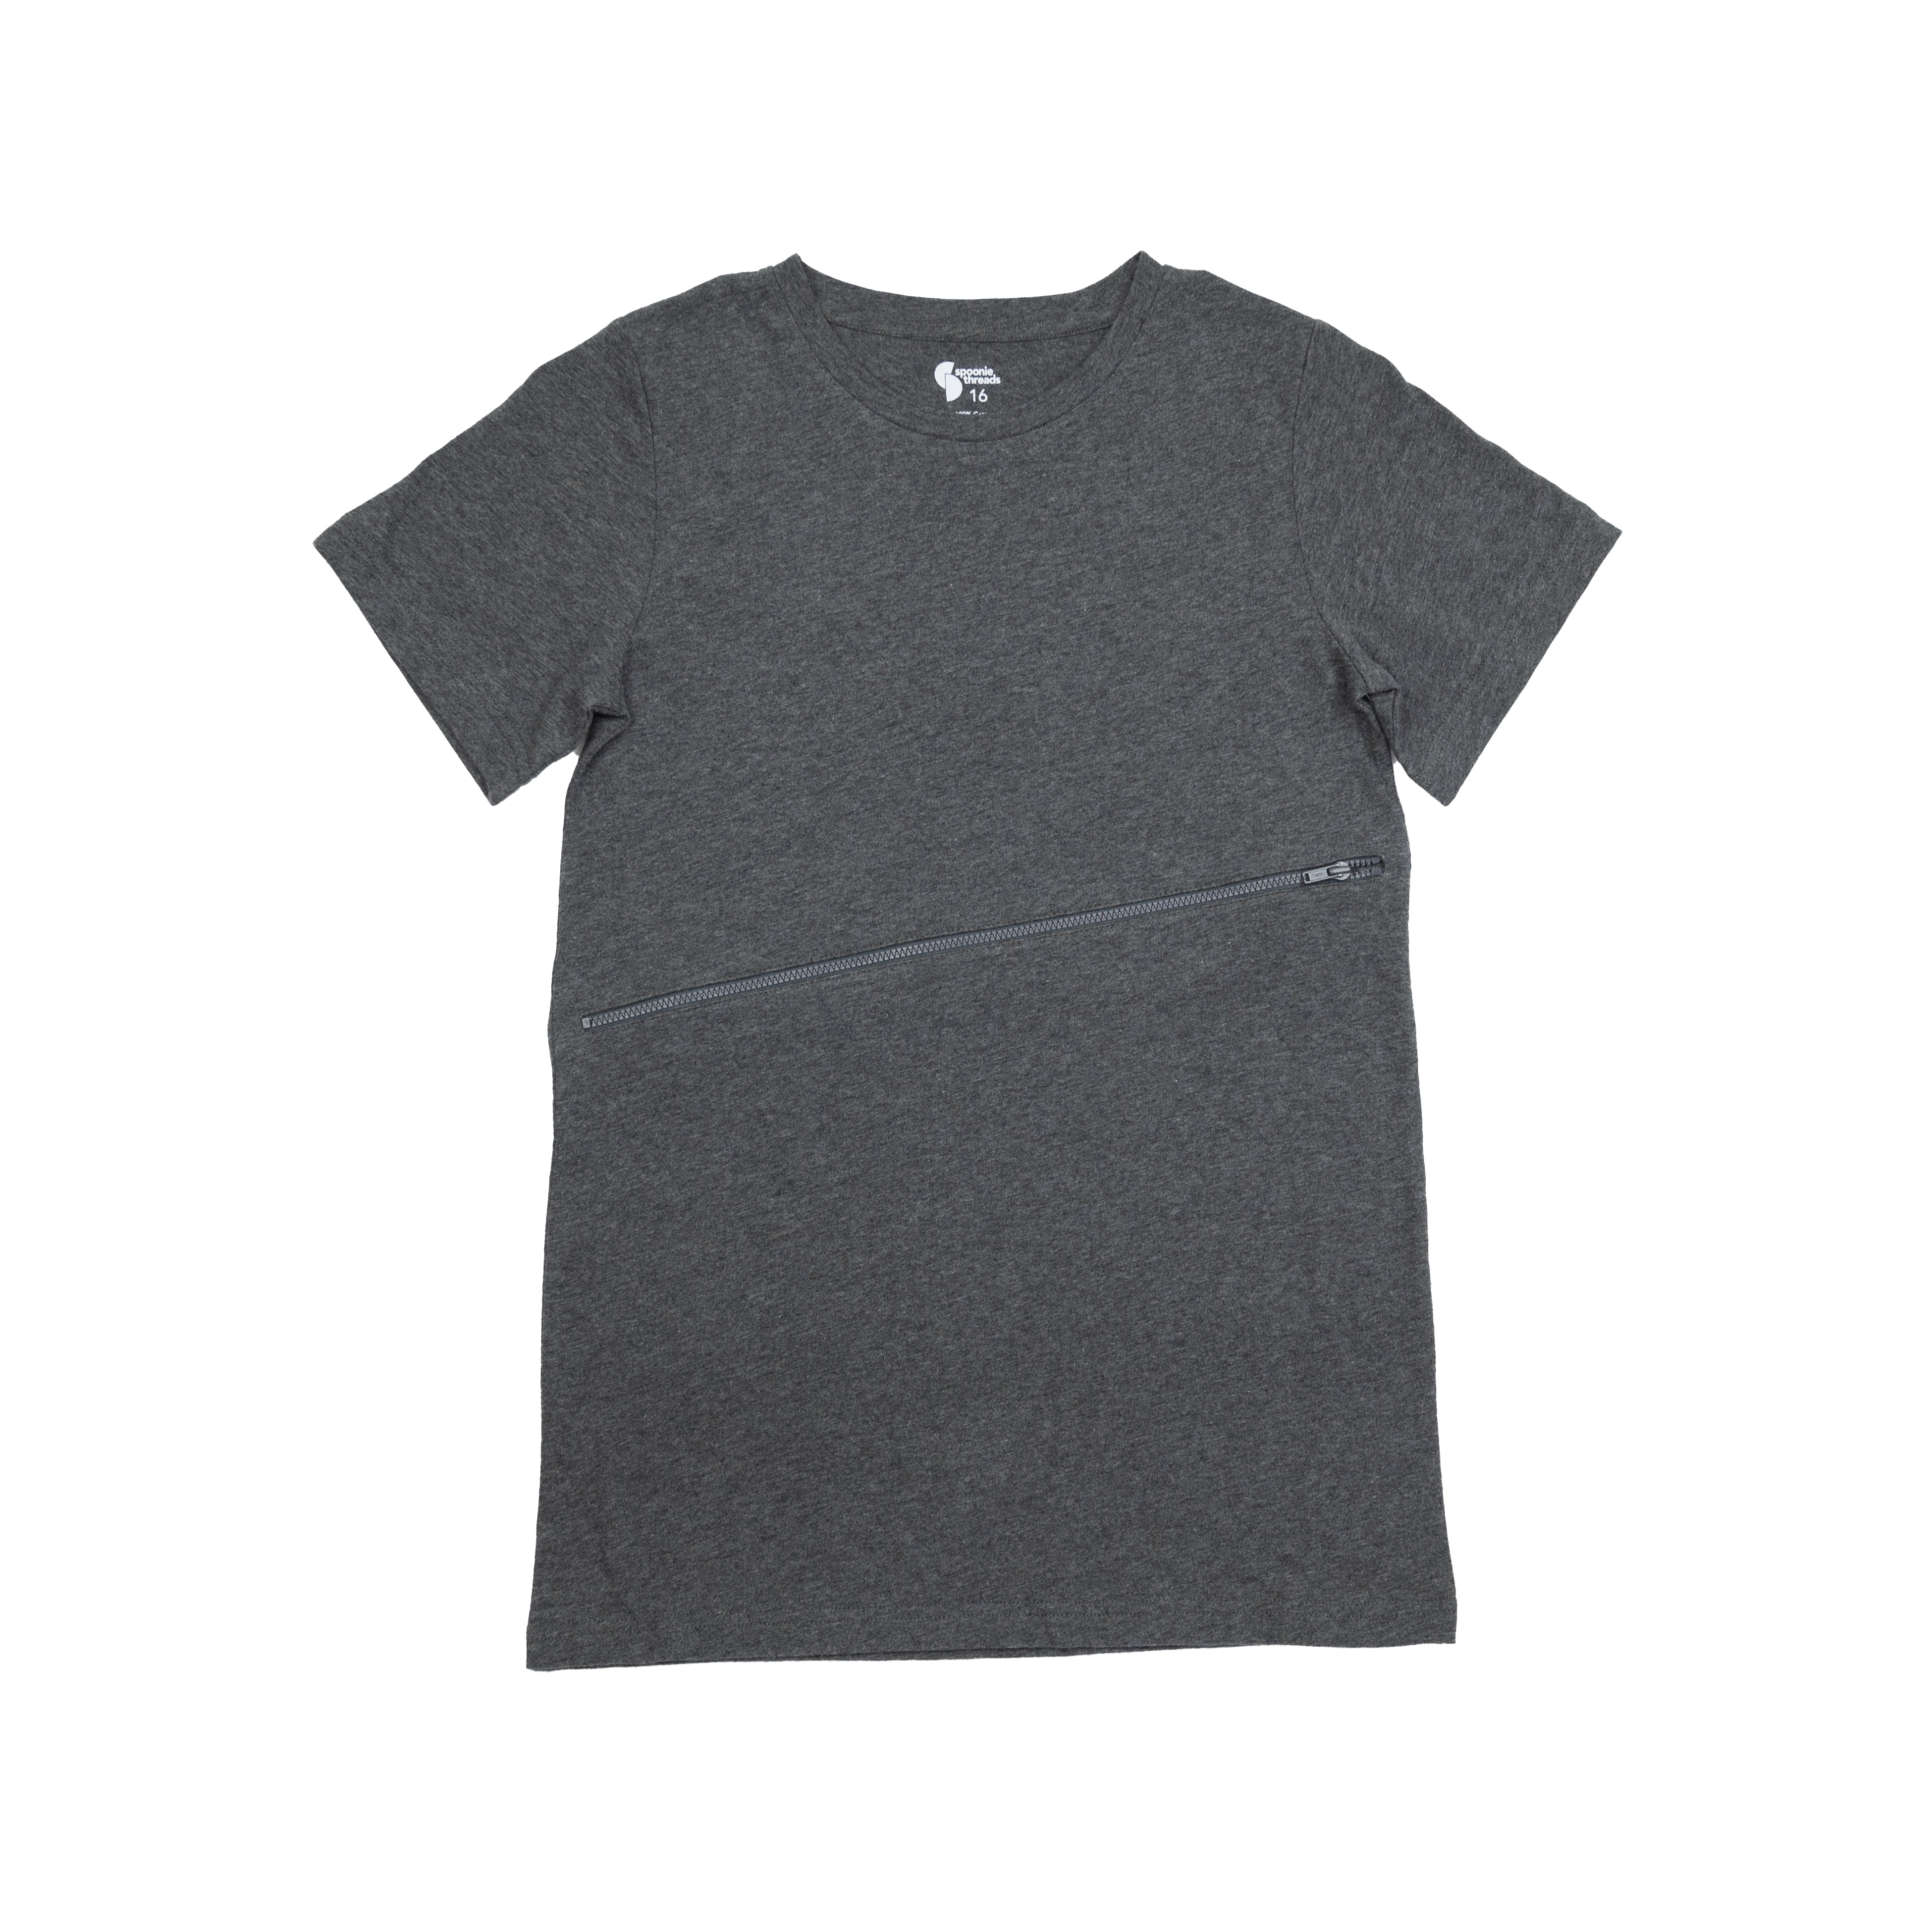 Charcoal G-Tube Zip Shirt